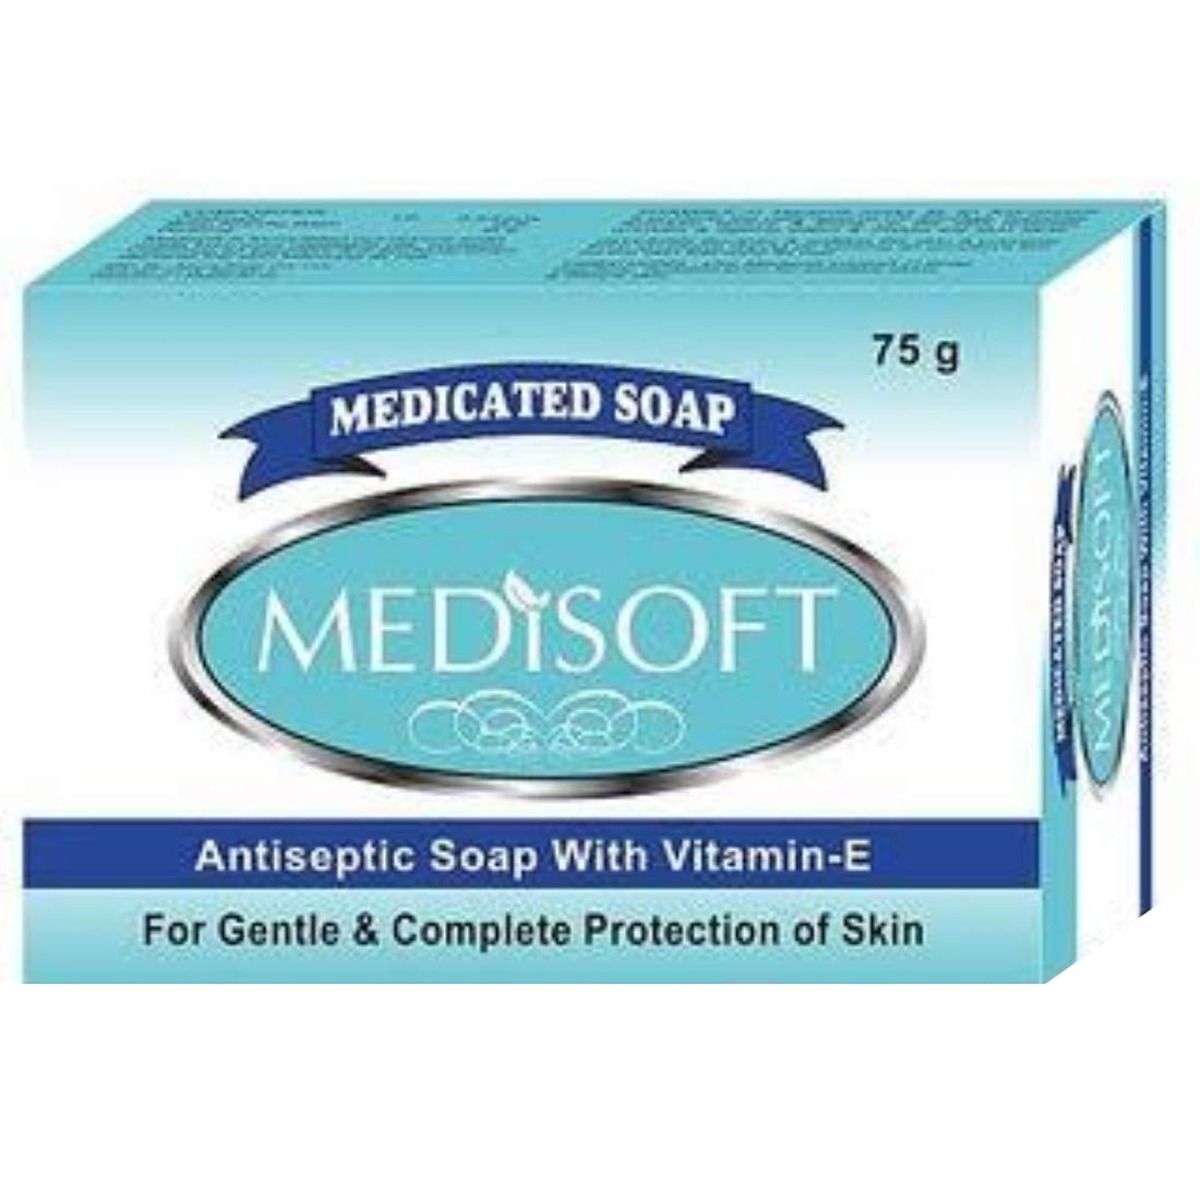 Medisoft Medicated Soap, 75 gm, Pack of 1 